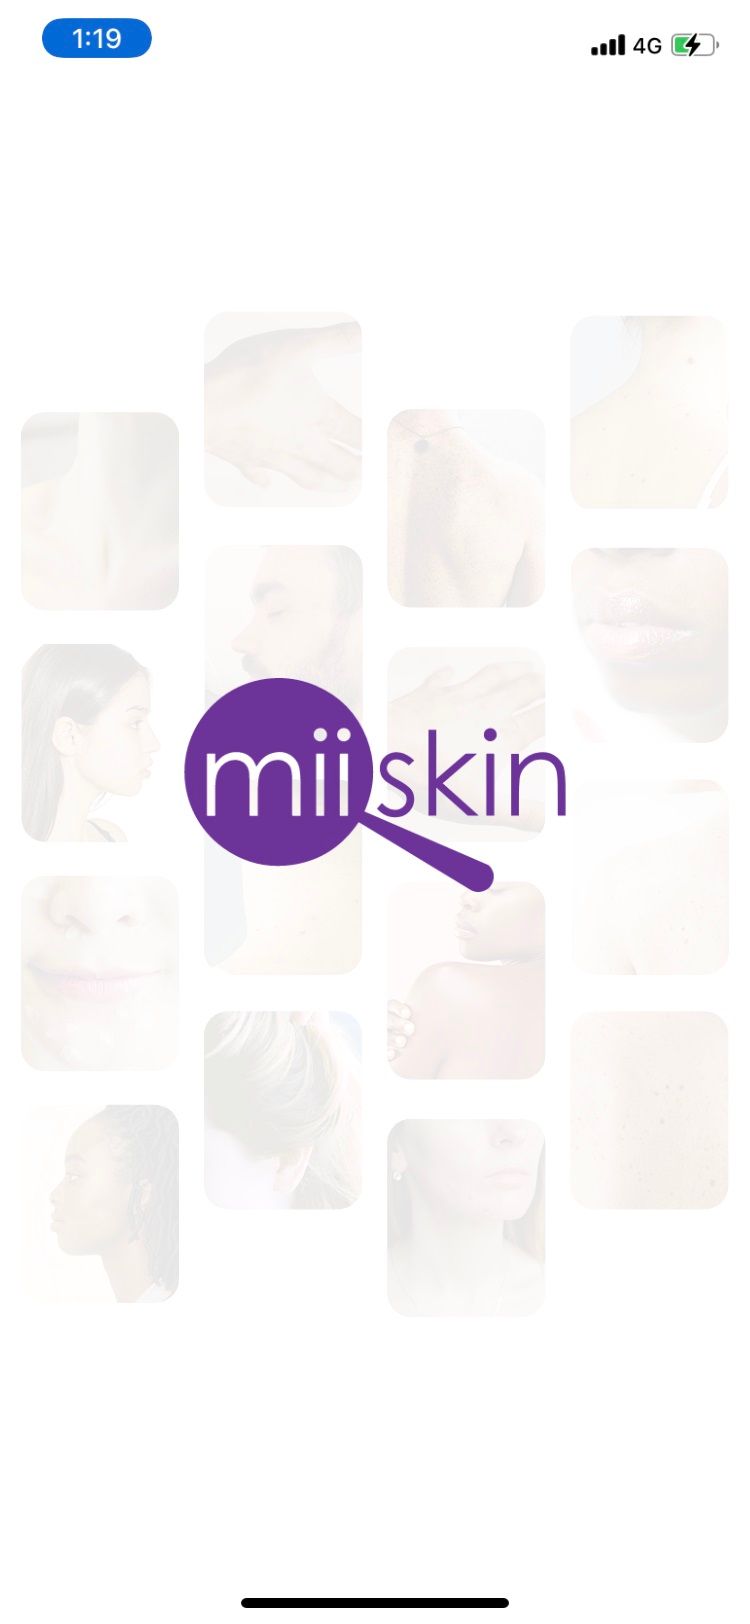 miiskin startup page